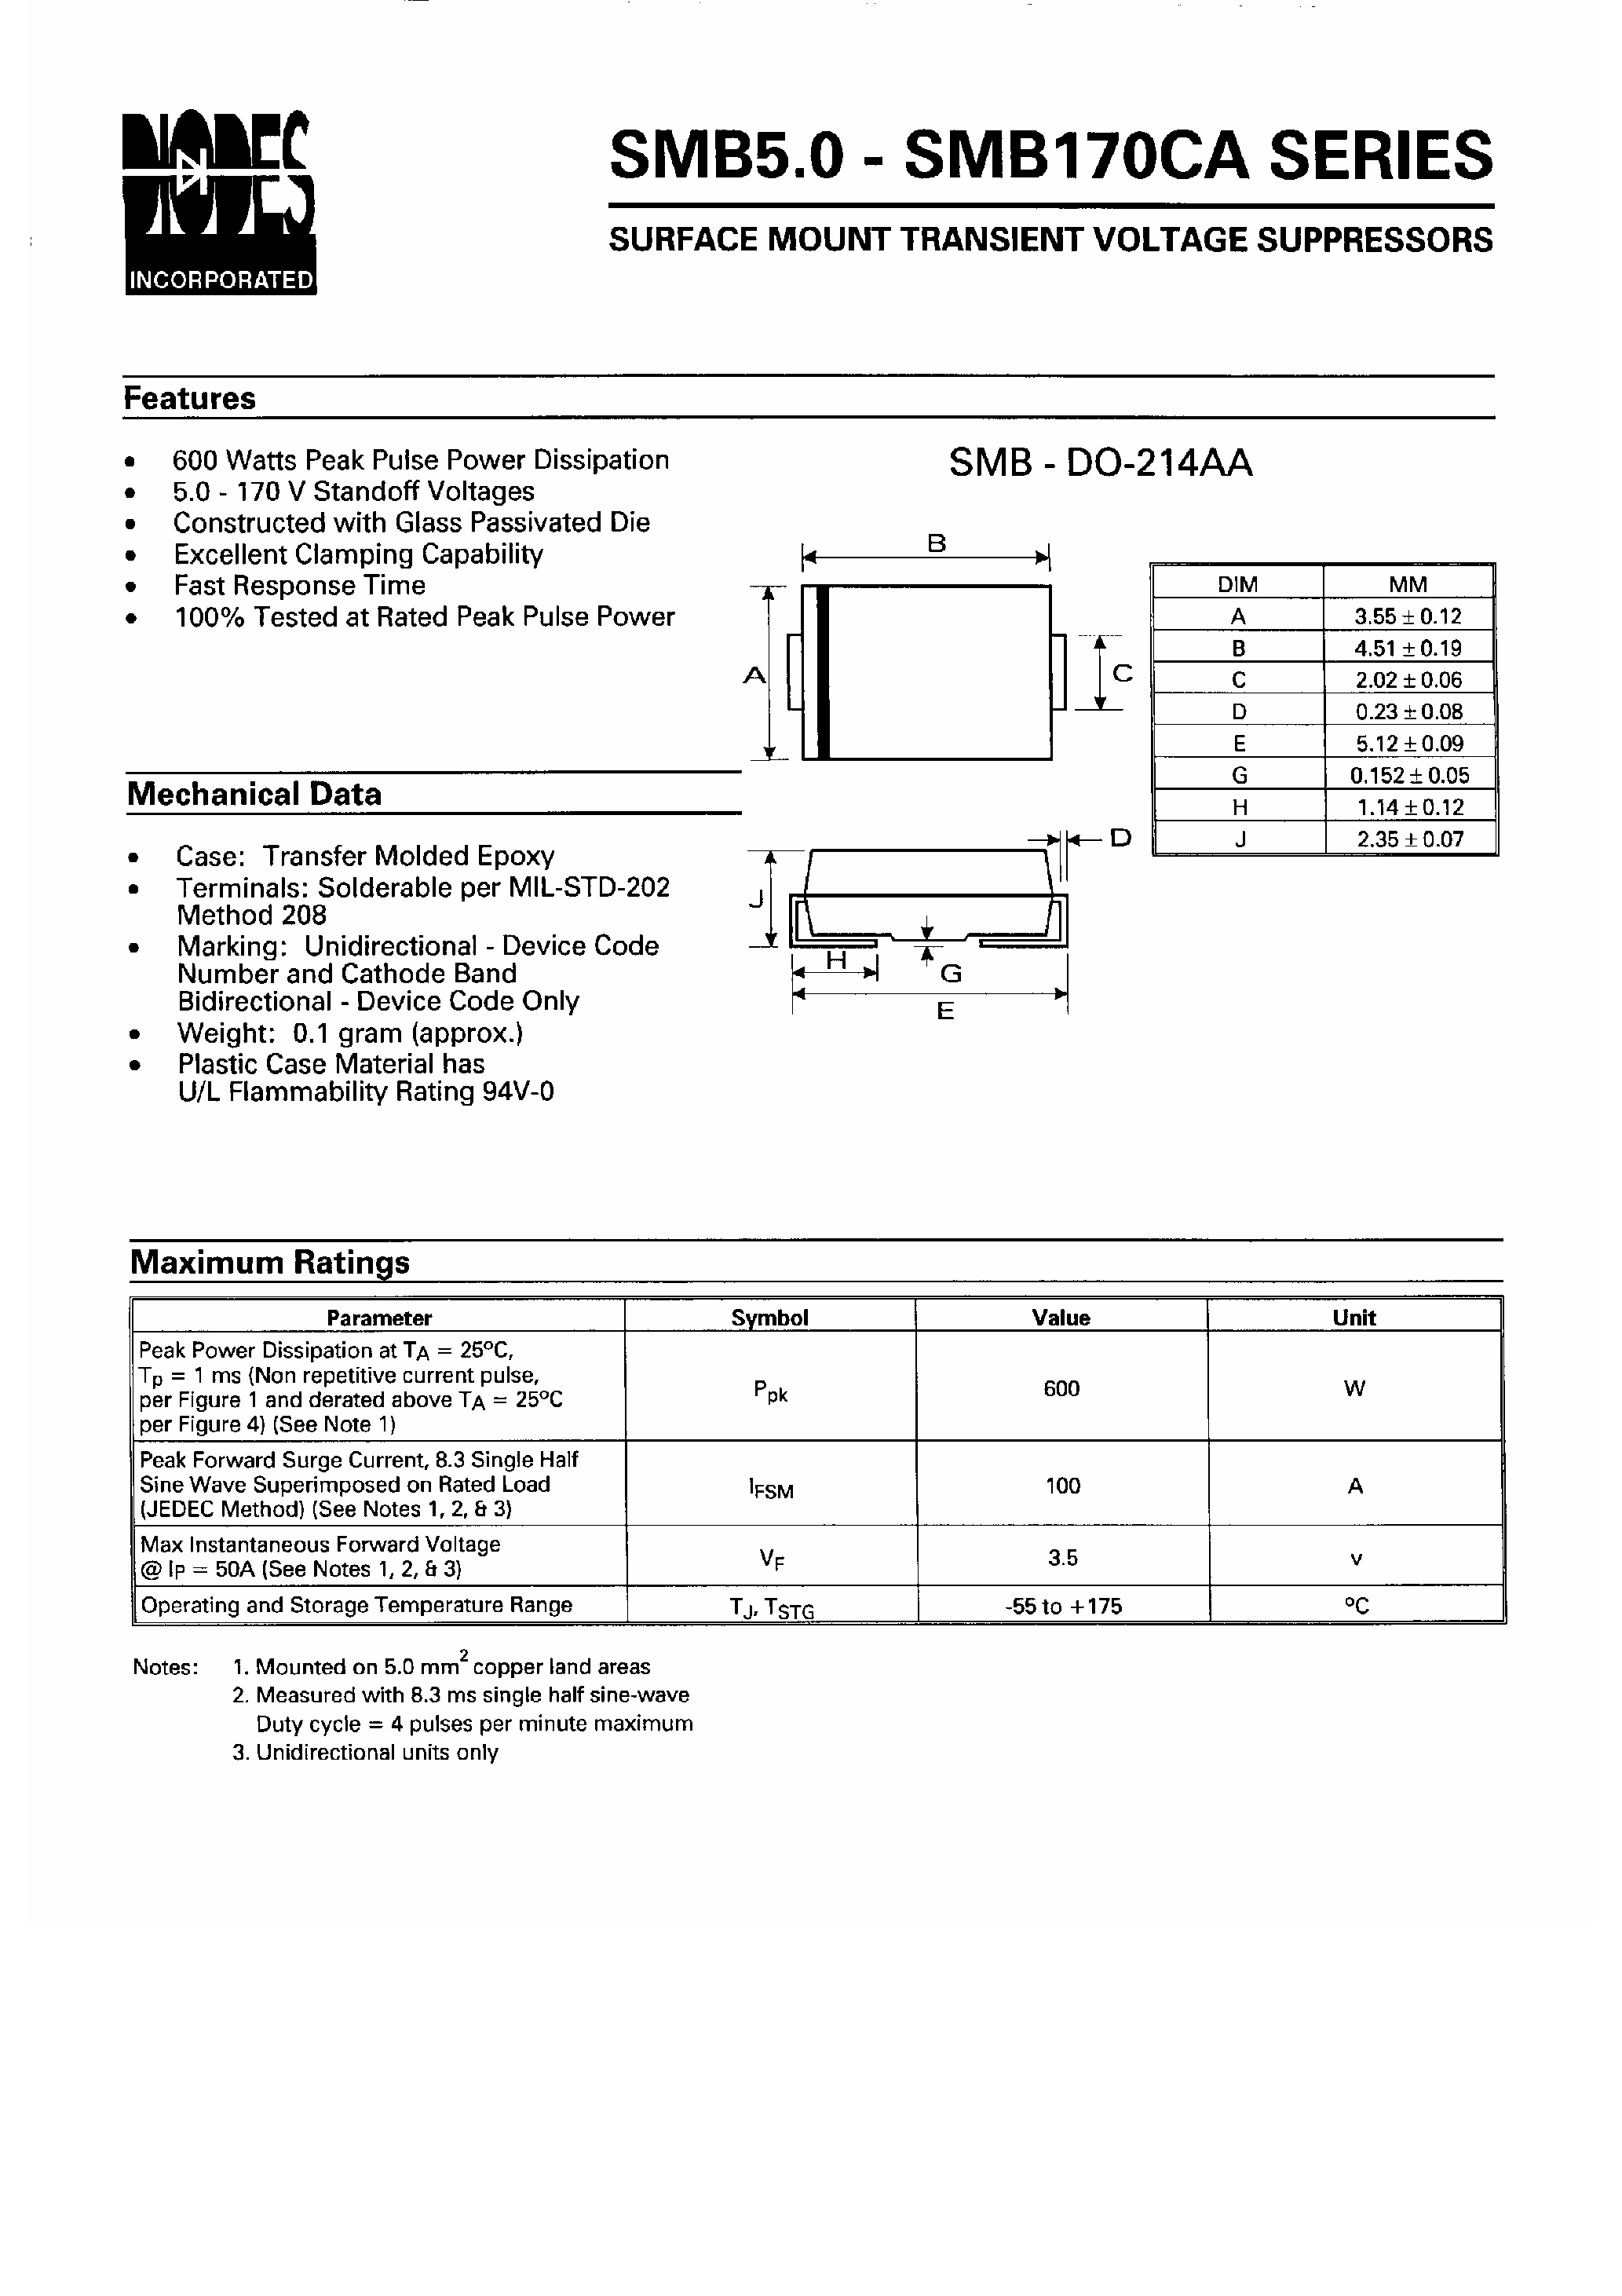 Даташит SMB160 - Surface Mount Transient Voltage Suppressors страница 1